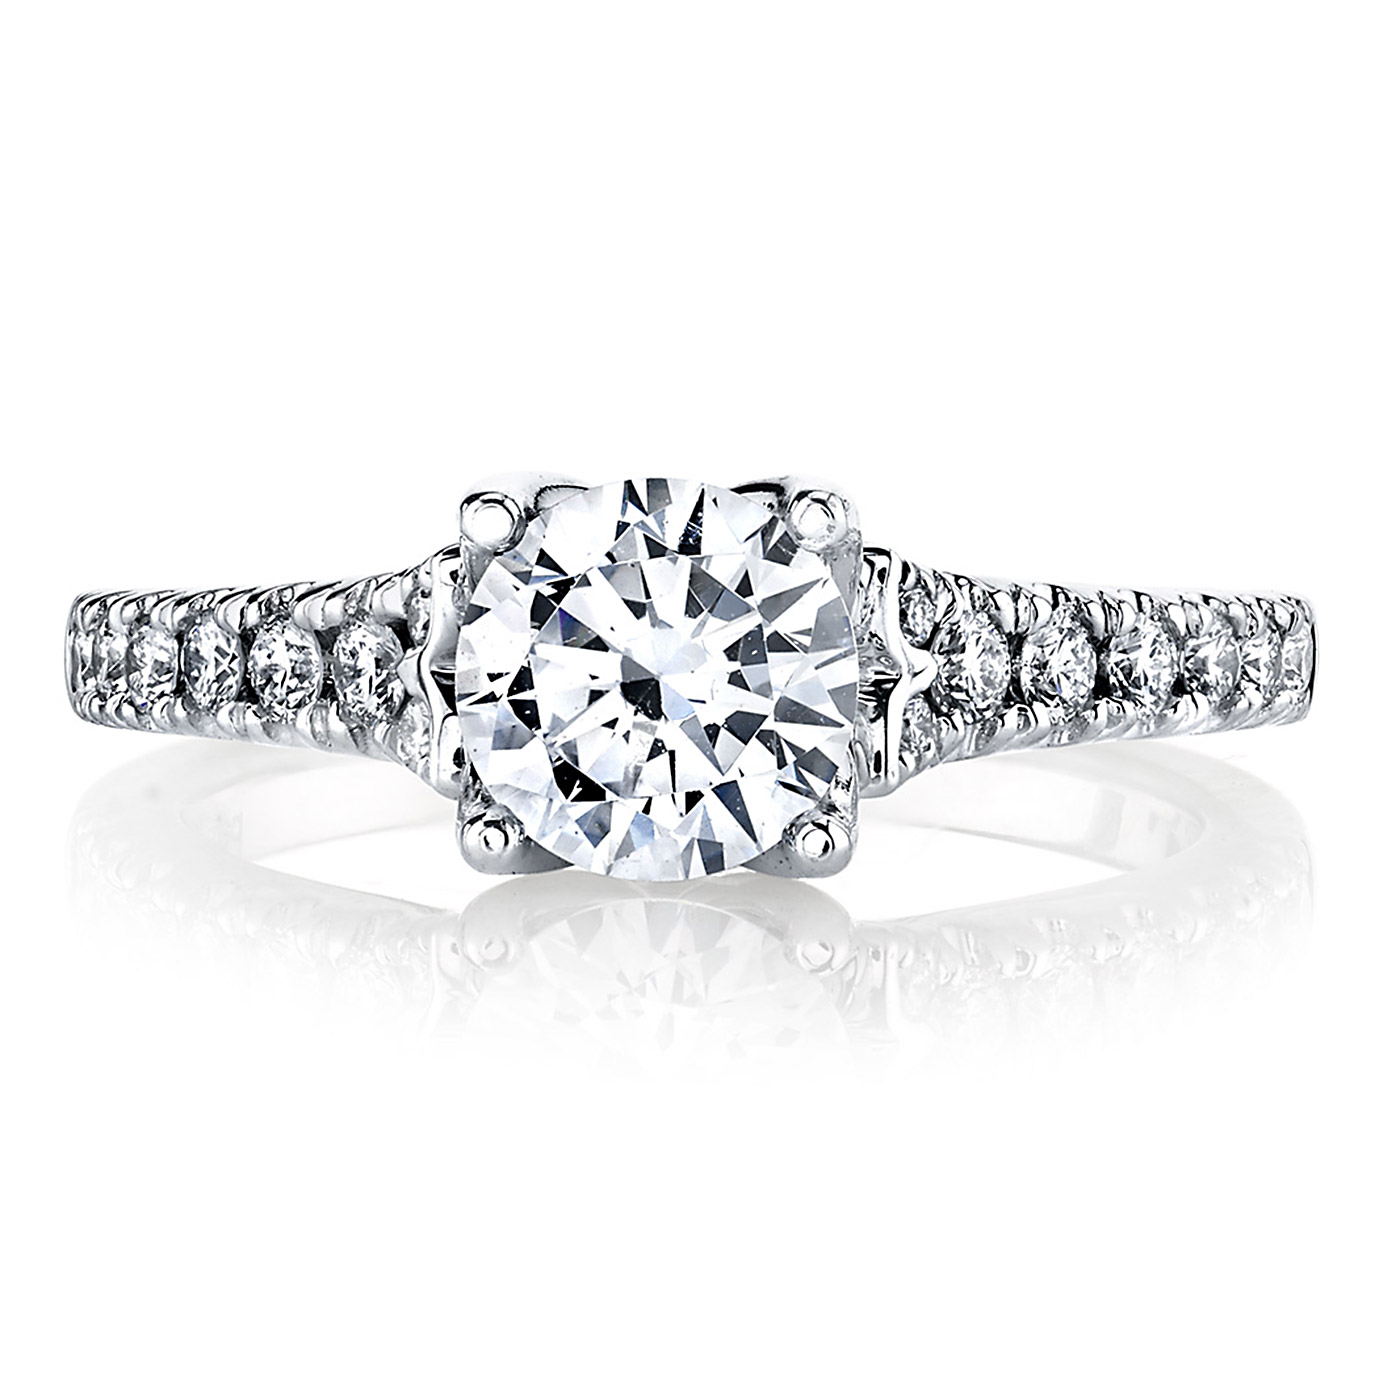 Parade New Classic 14 Karat Diamond Engagement Ring R3935 Alternative View 2